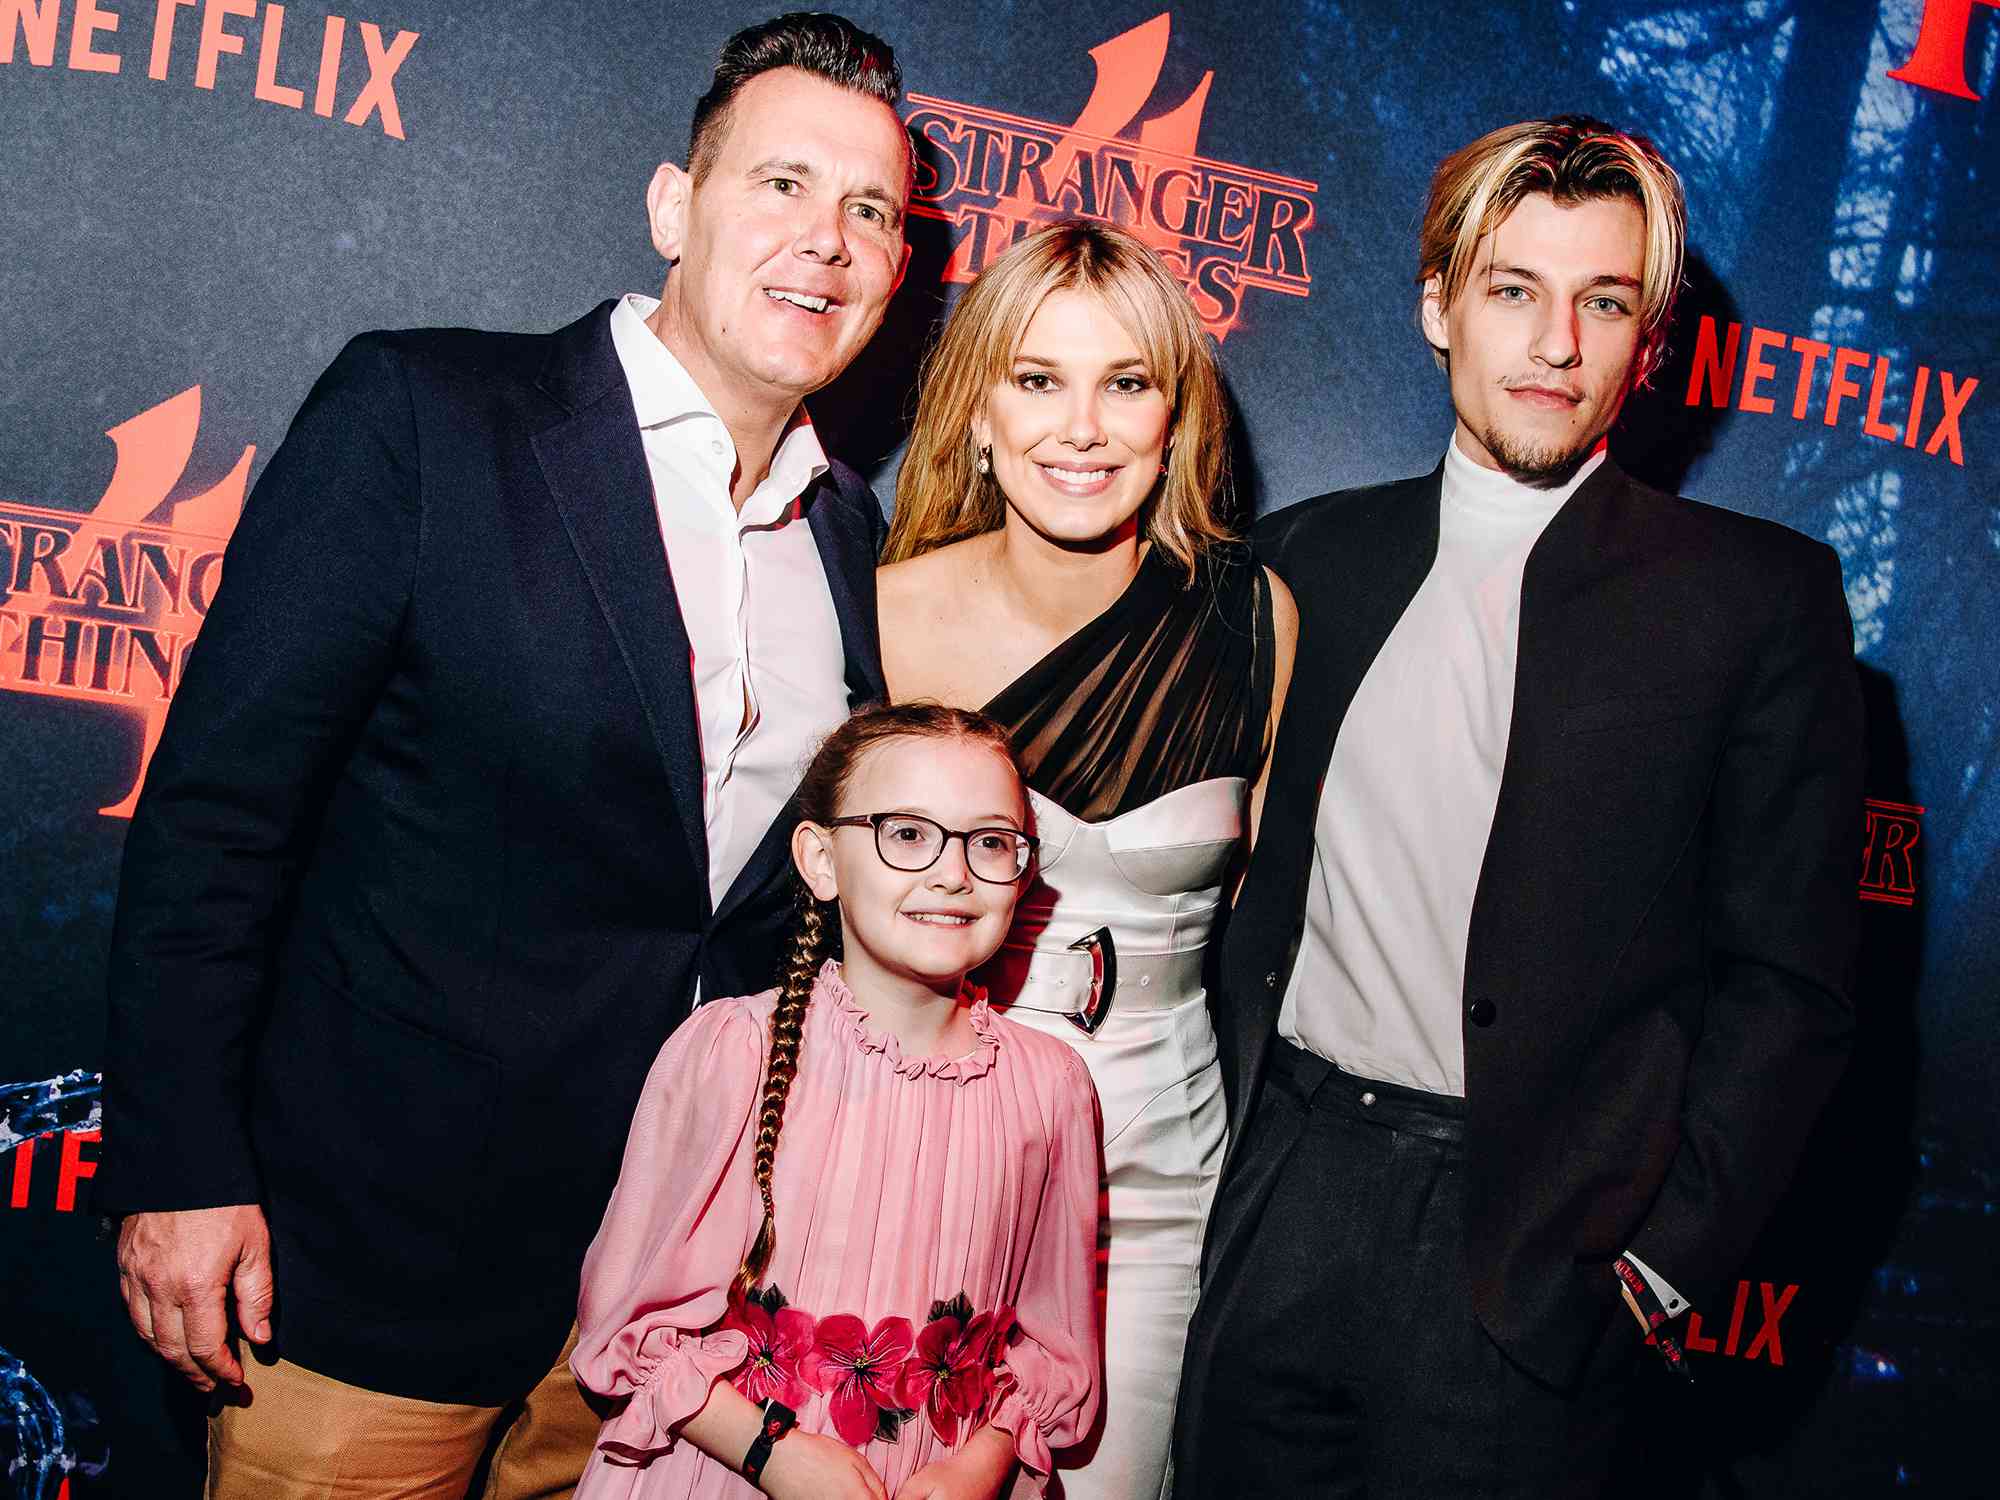 Robert Brown, Ava Brown, Millie Bobby Brown, Jake Bongiovi at the premiere of season 4 of 'Stranger Things' in 2022.